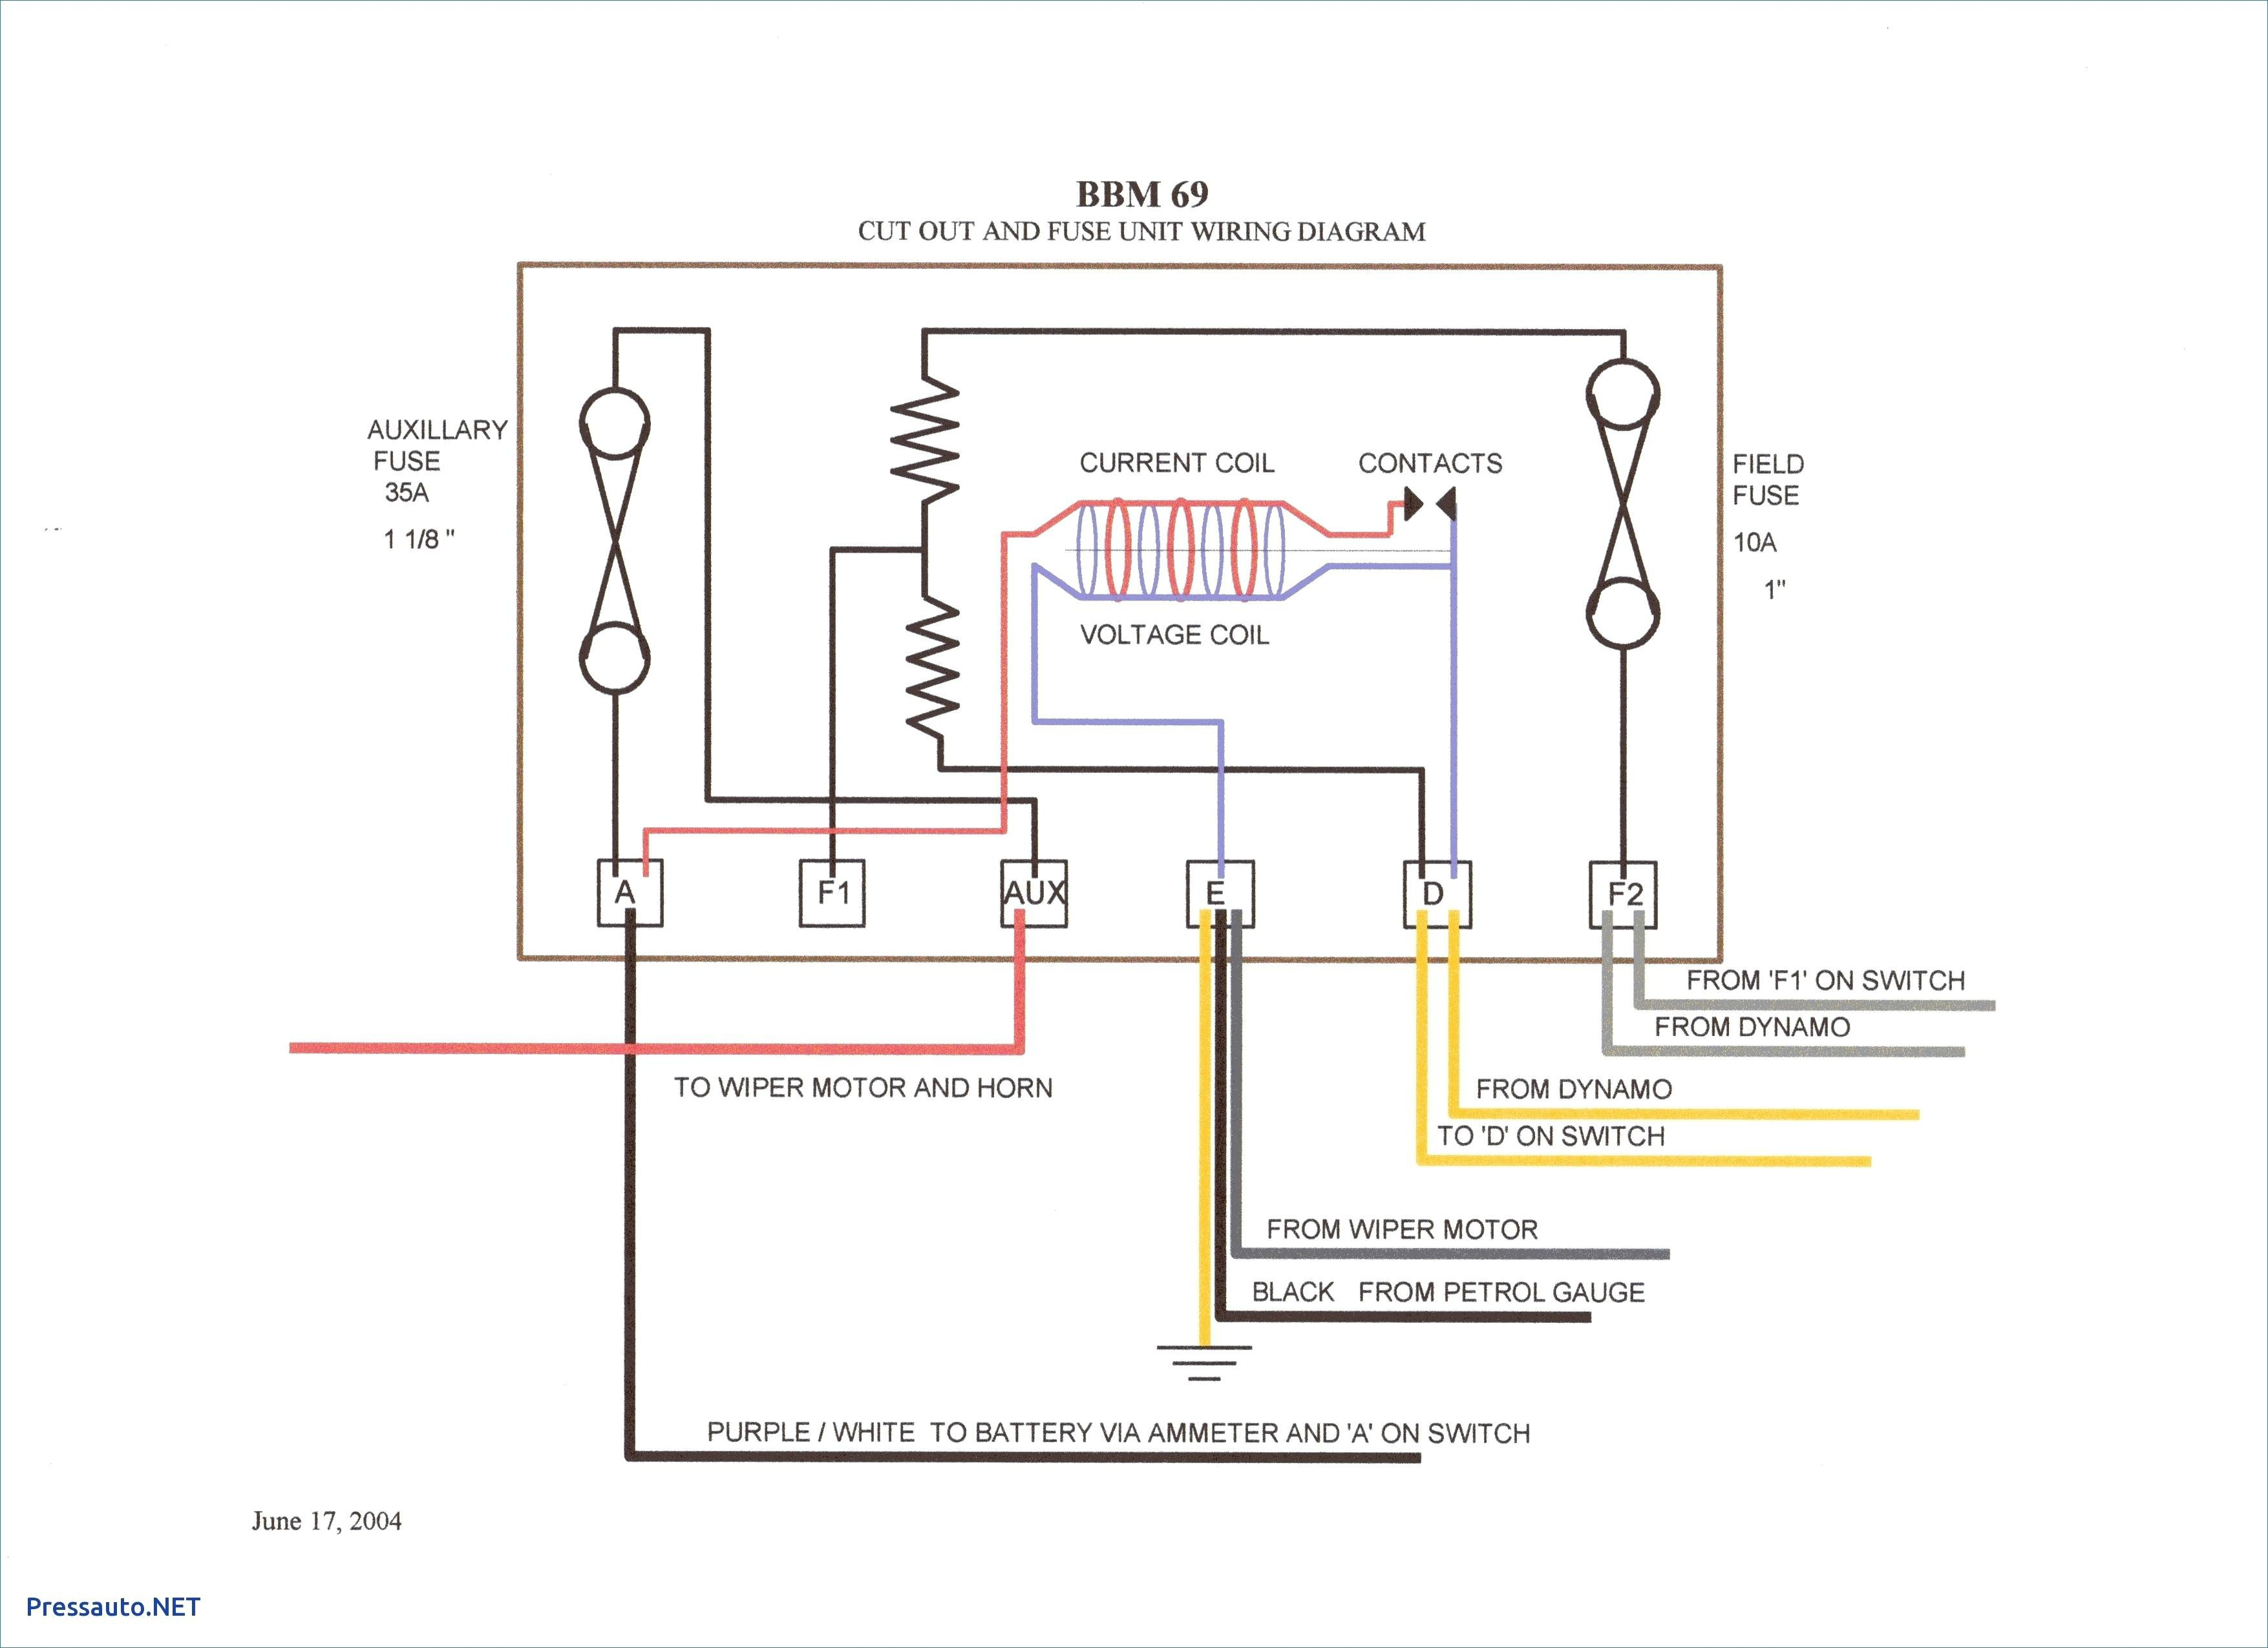 Whirlpool Hot Water Heater Wiring Diagram | Wiring Diagram - Hot Water Heater Wiring Diagram